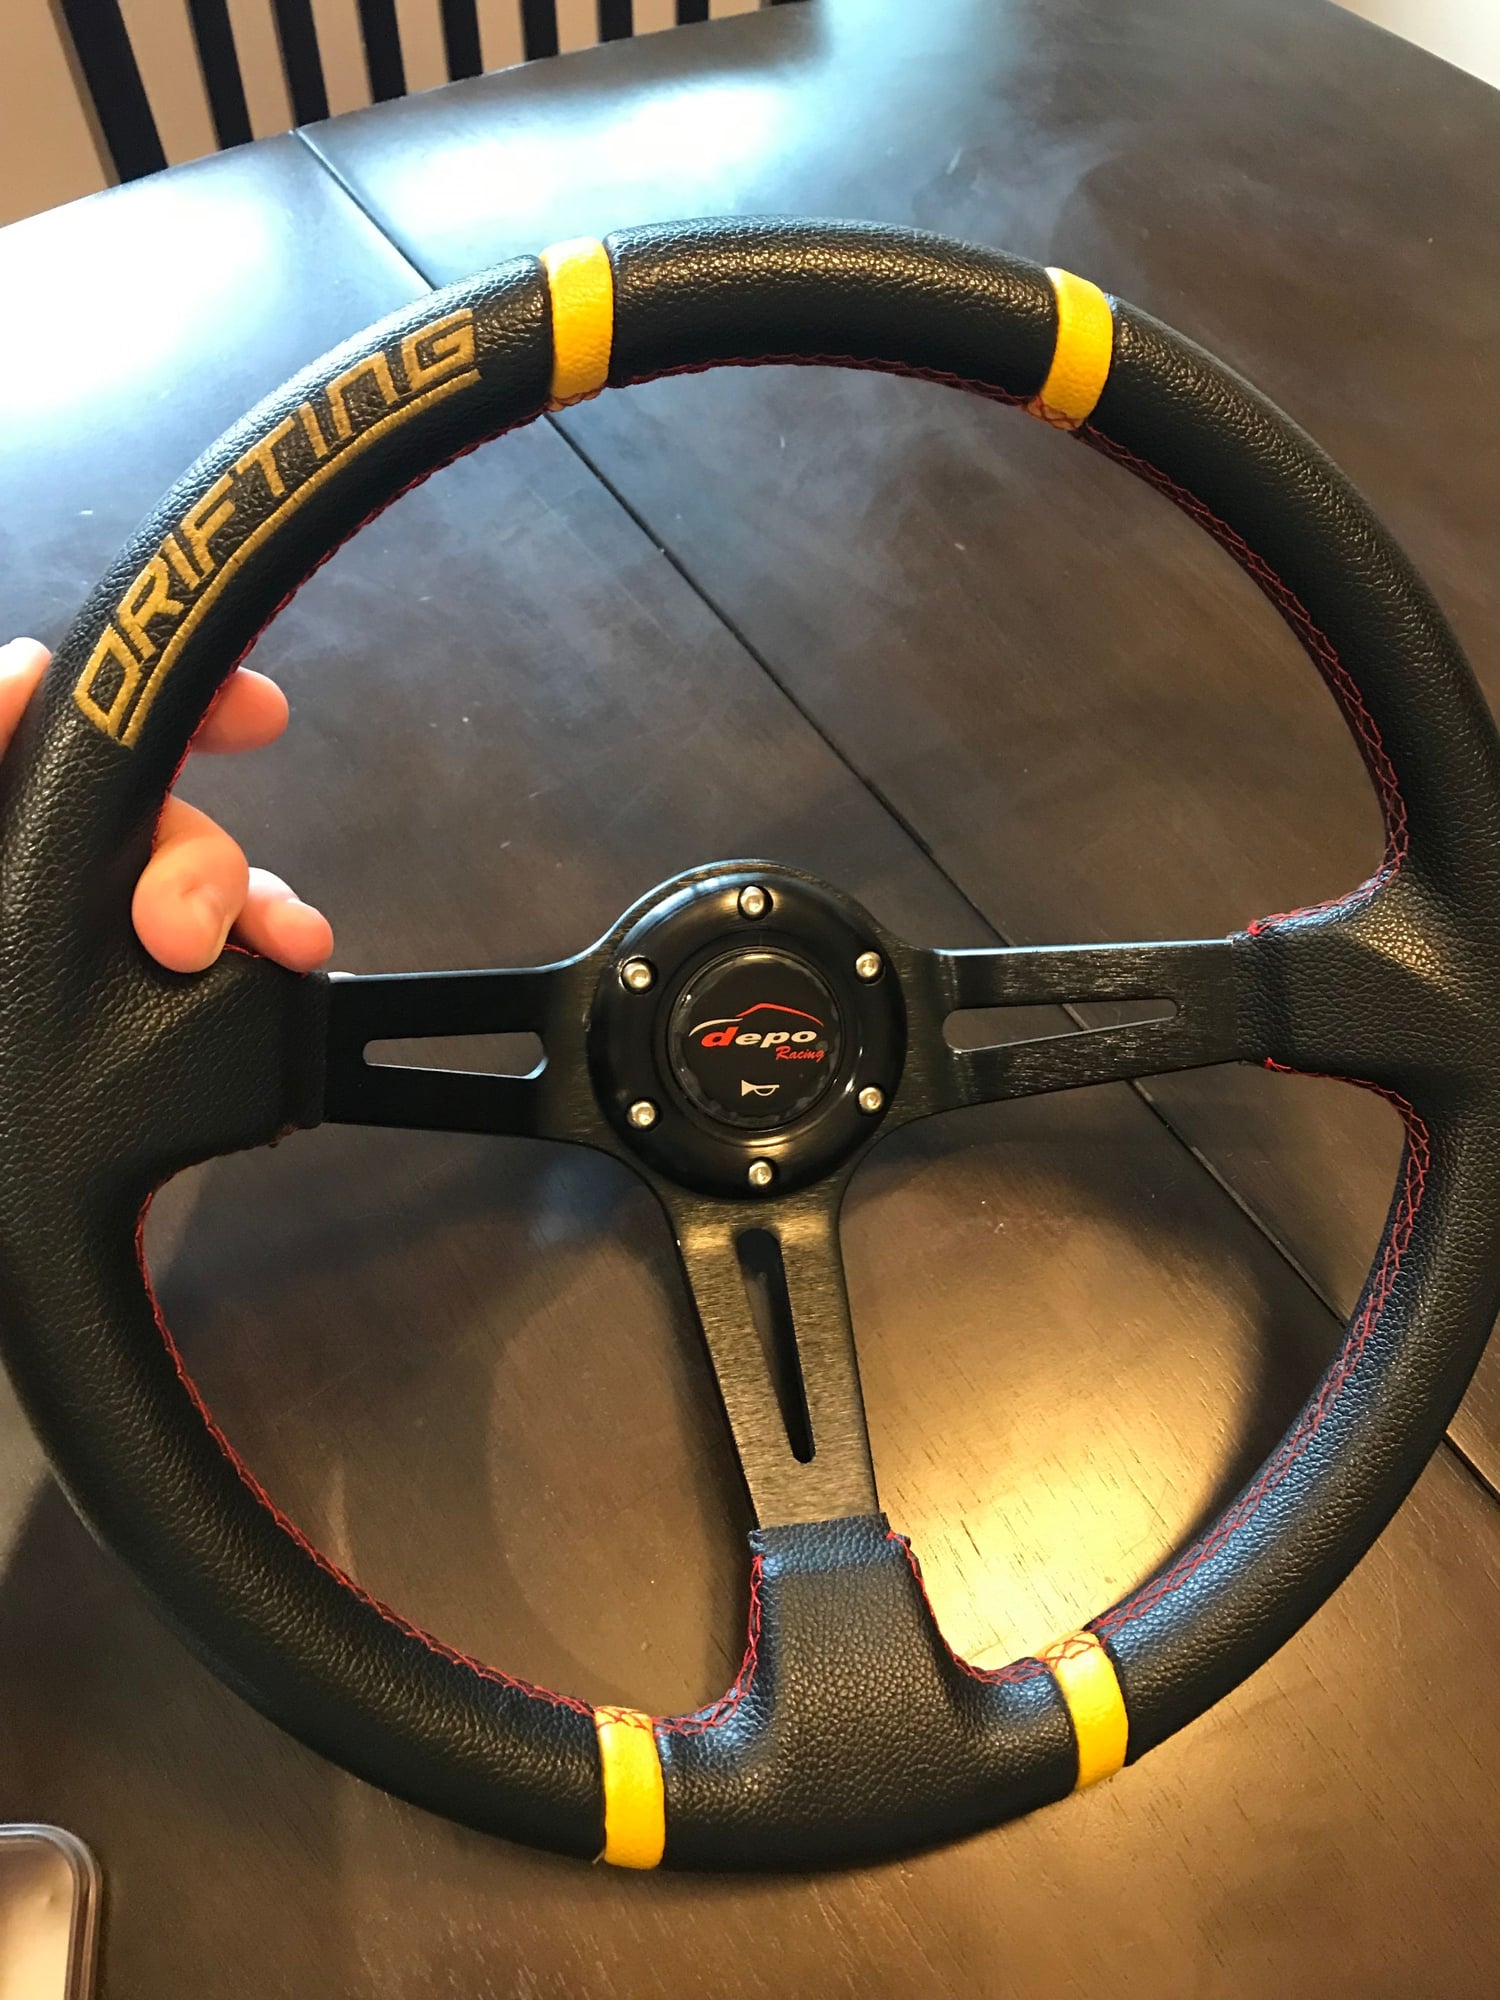 Steering/Suspension - "DRIFTING' steering wheel - Used - Ledyard, CT 06339, United States